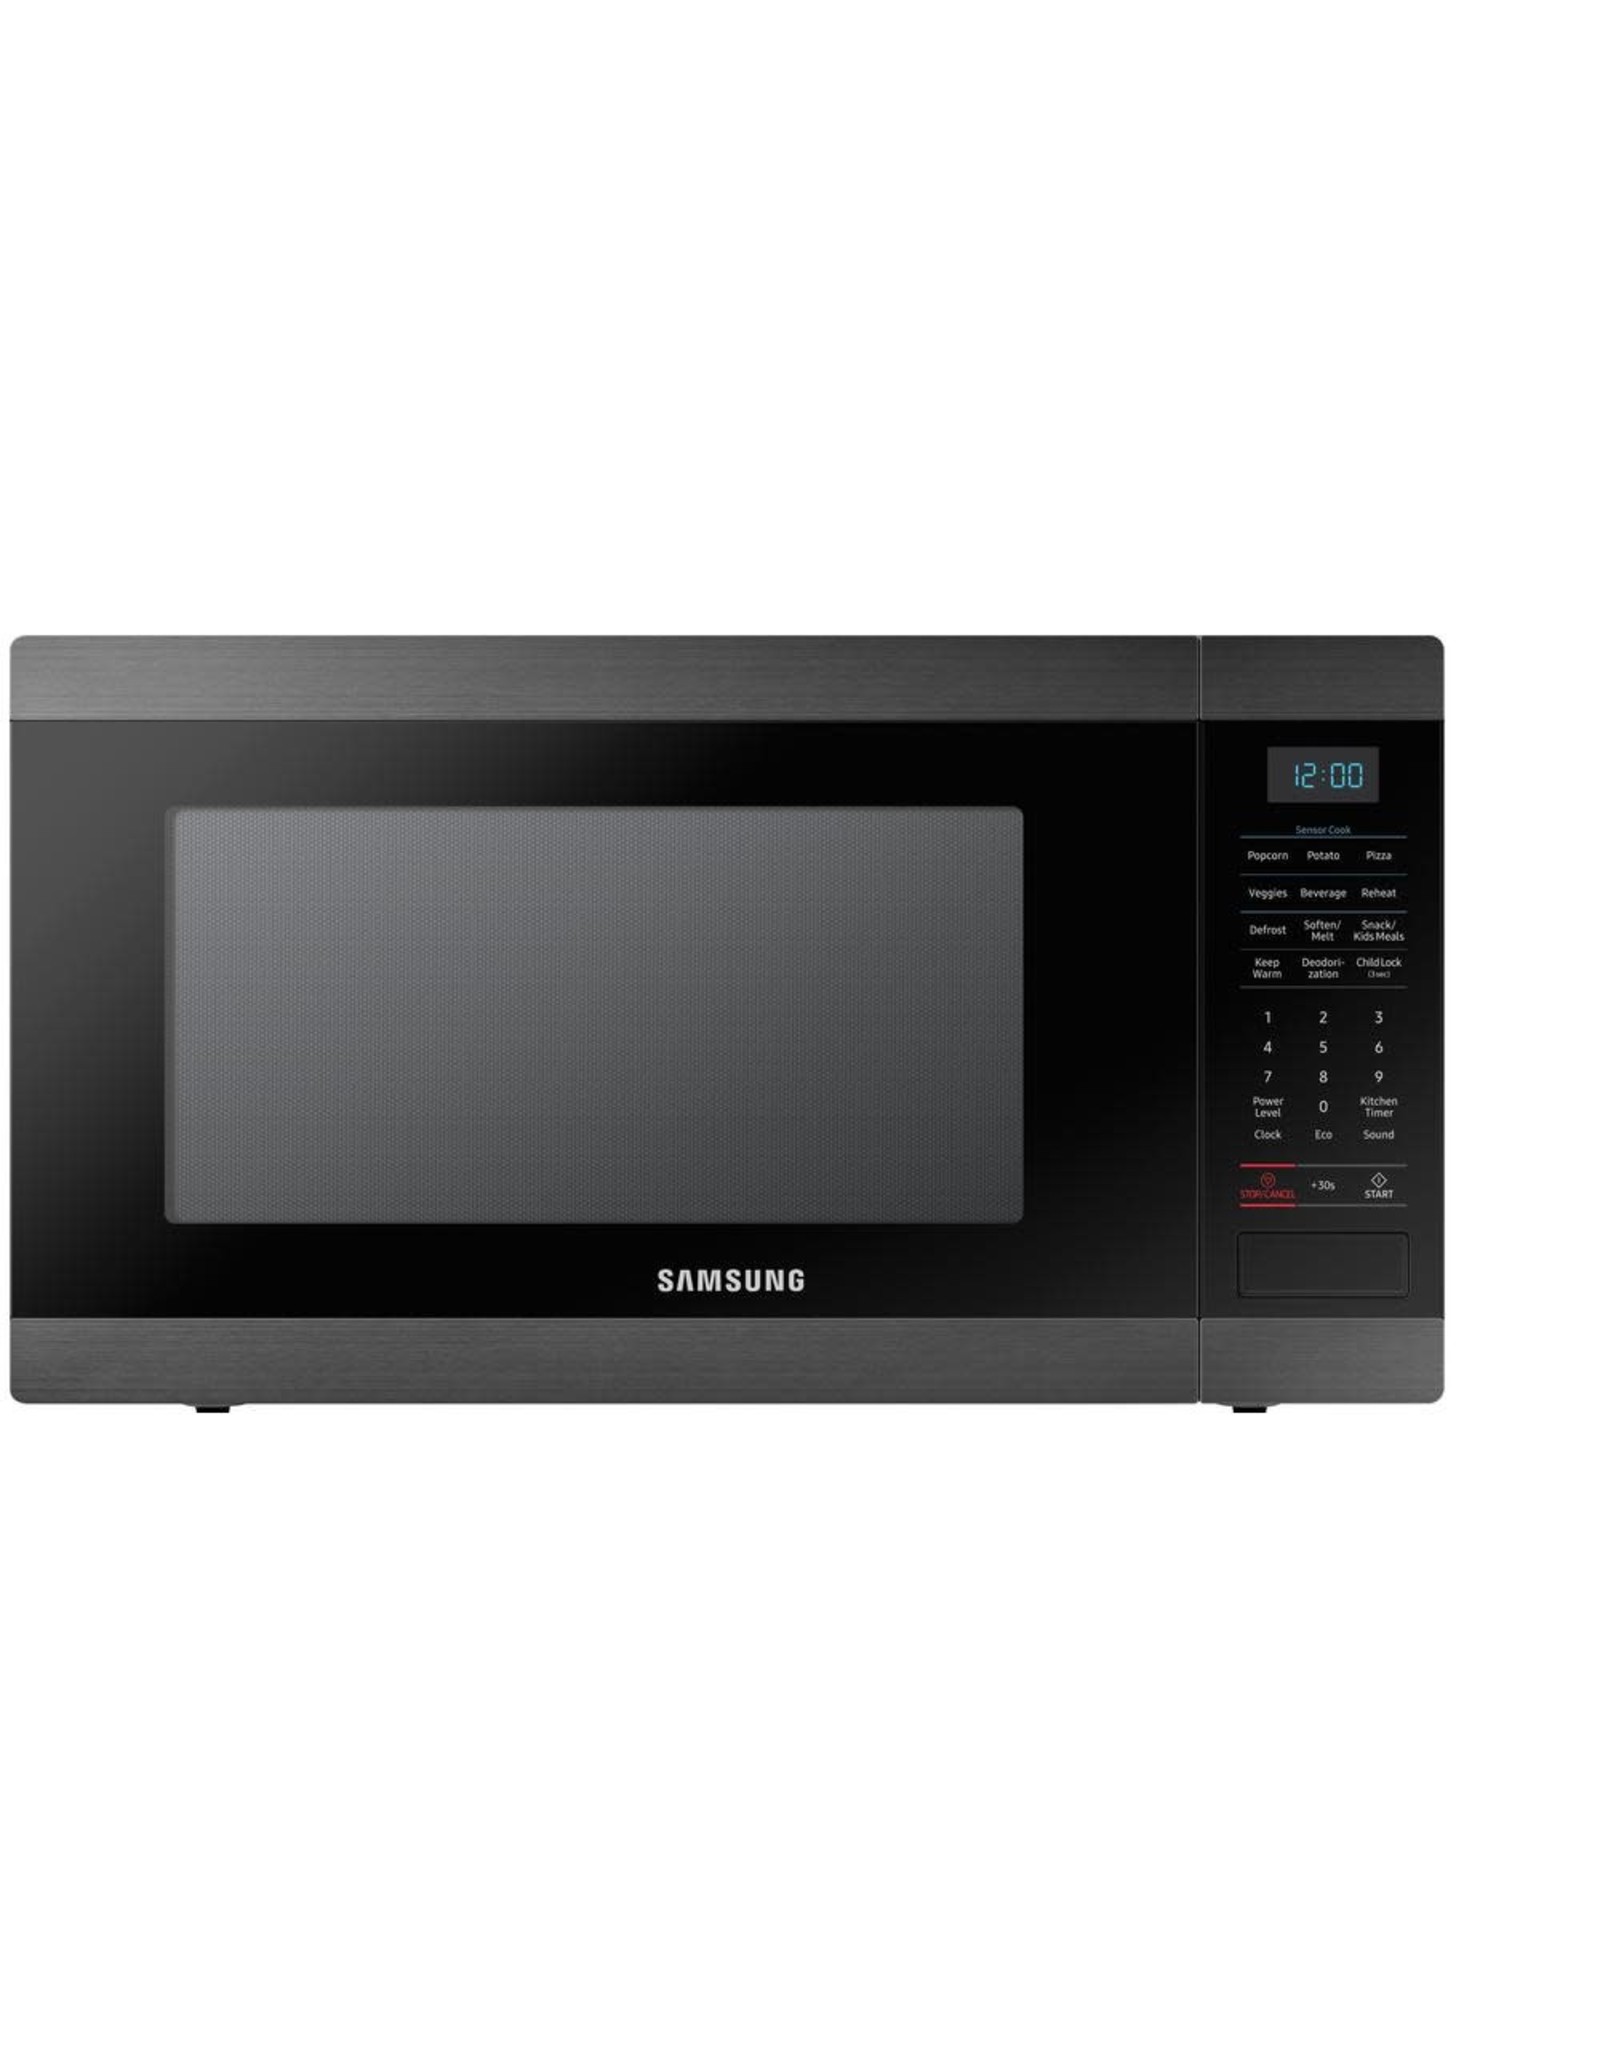 SAMSUNG MS19M8000AG Samsung Counter Top Microwave; 1.9 cu ft Large Capacity; Ceramic Enamel Interior